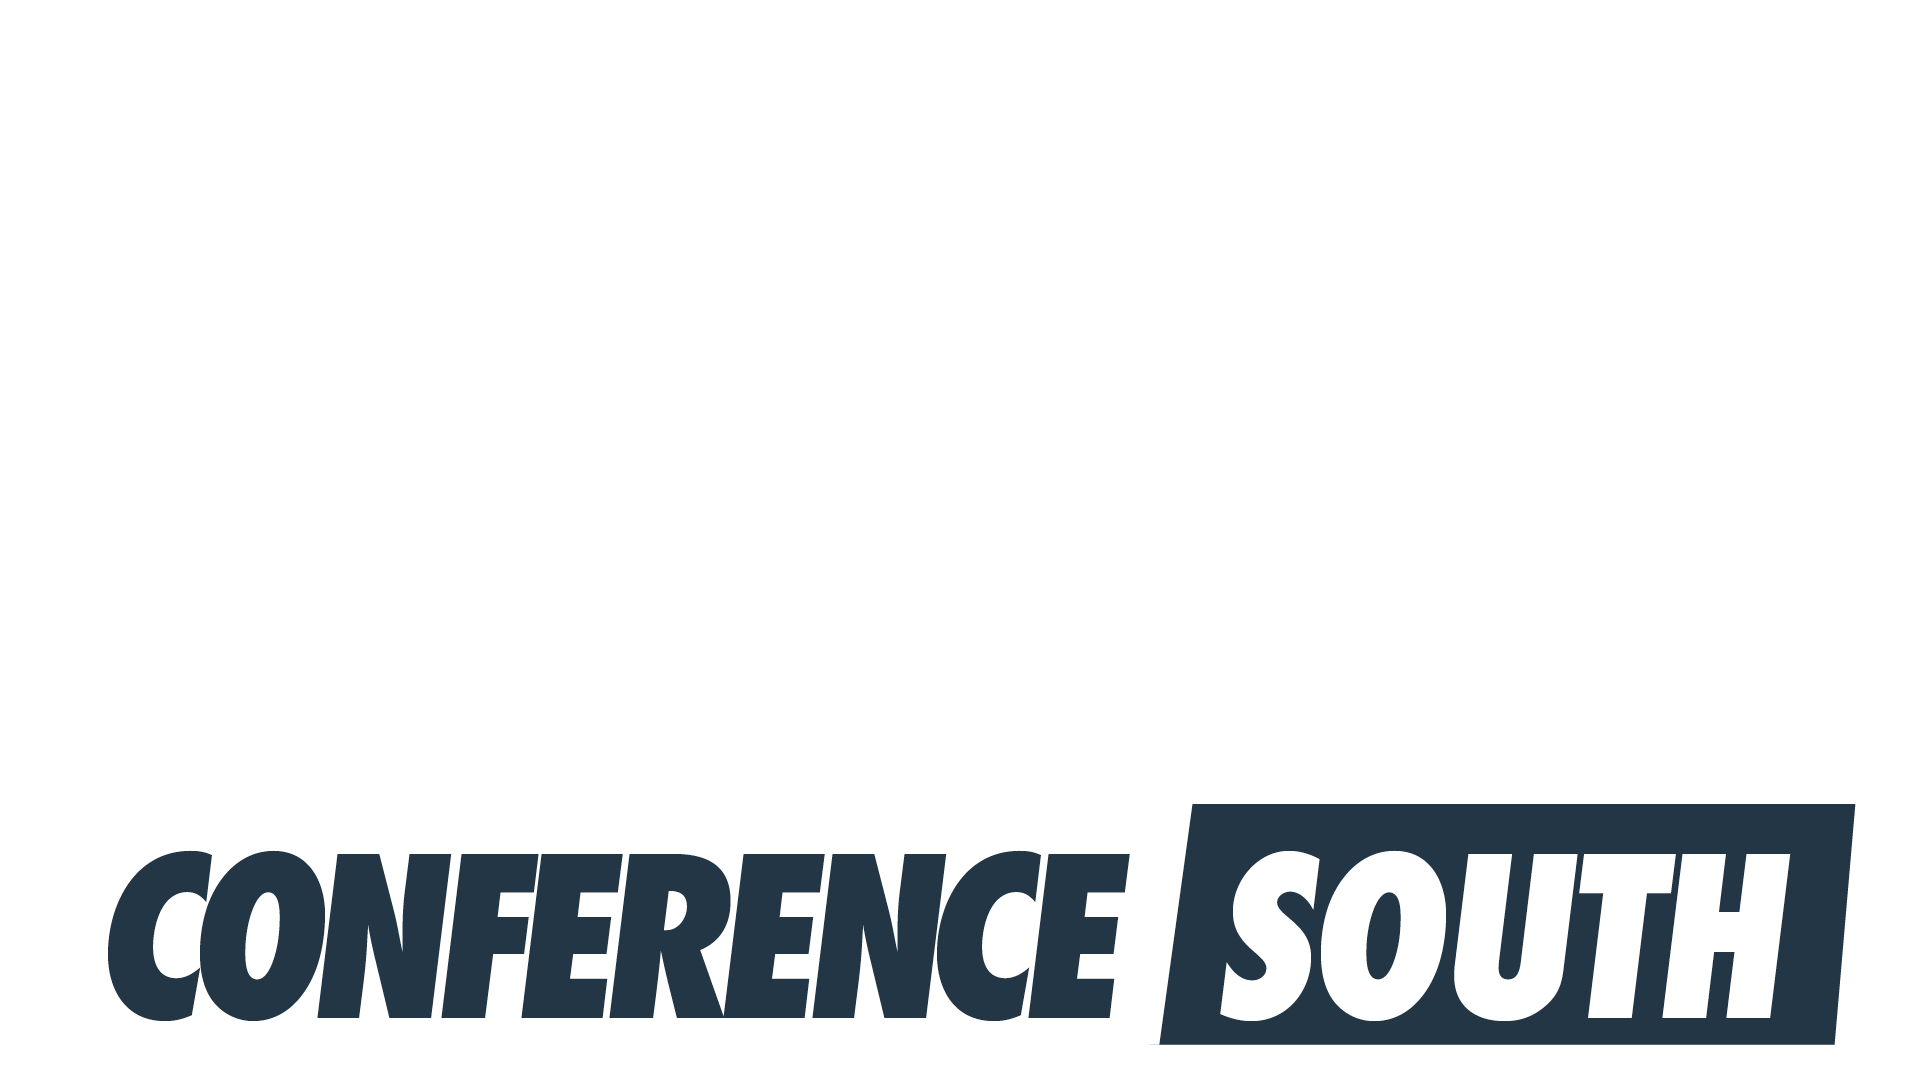 Striving Together Conference South Logo